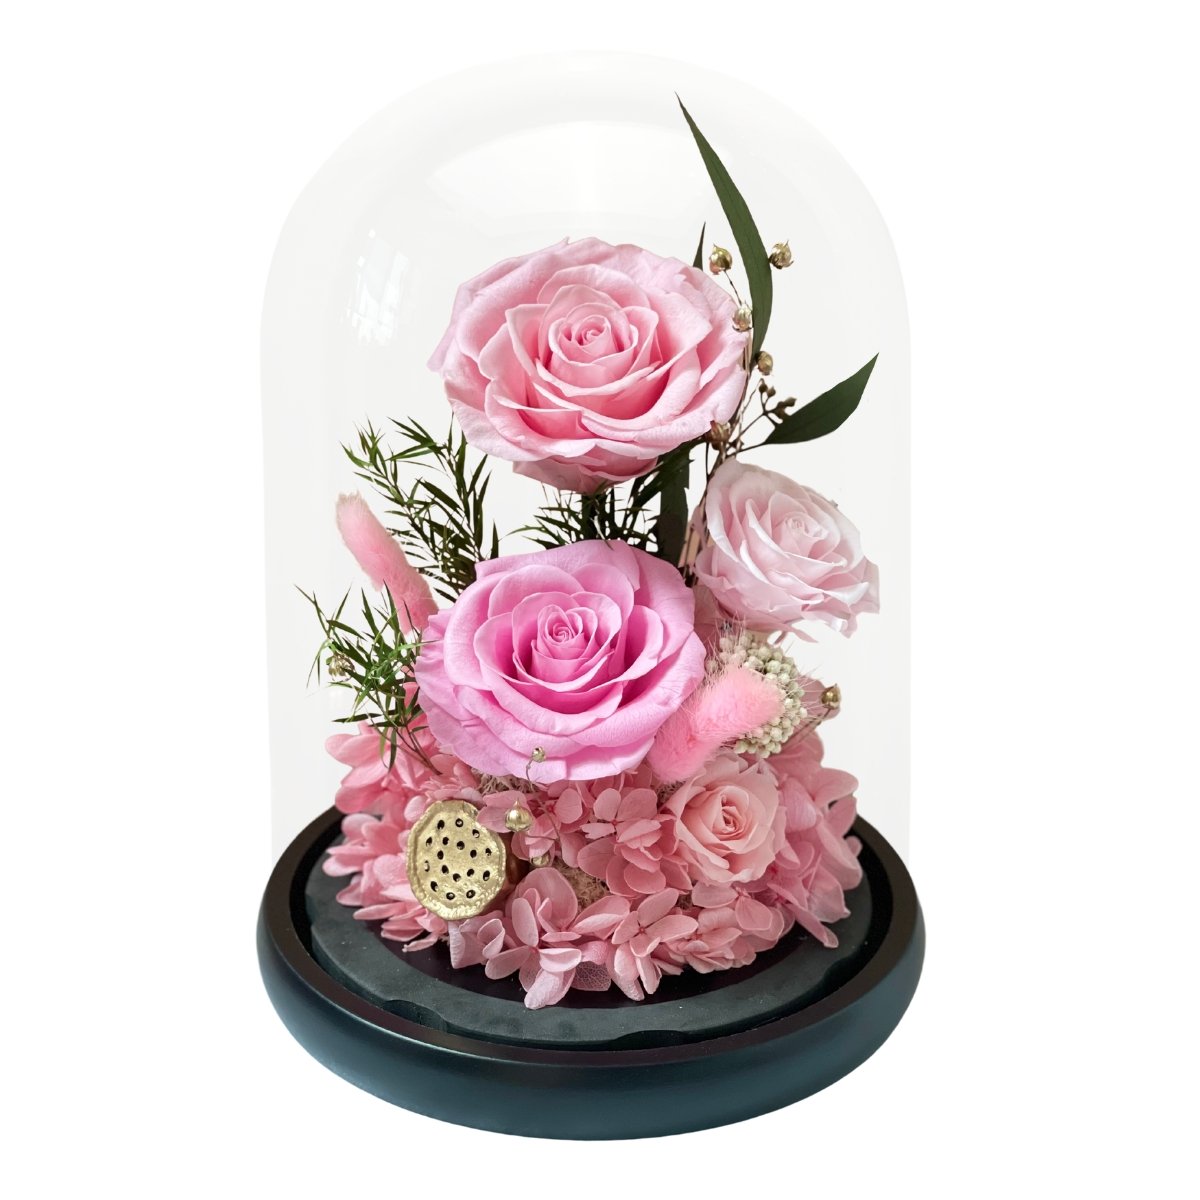 Aimi - 愛美あいみ - Ichigo - Flower - Preserved Flowers & Fresh Flower Florist Gift Store